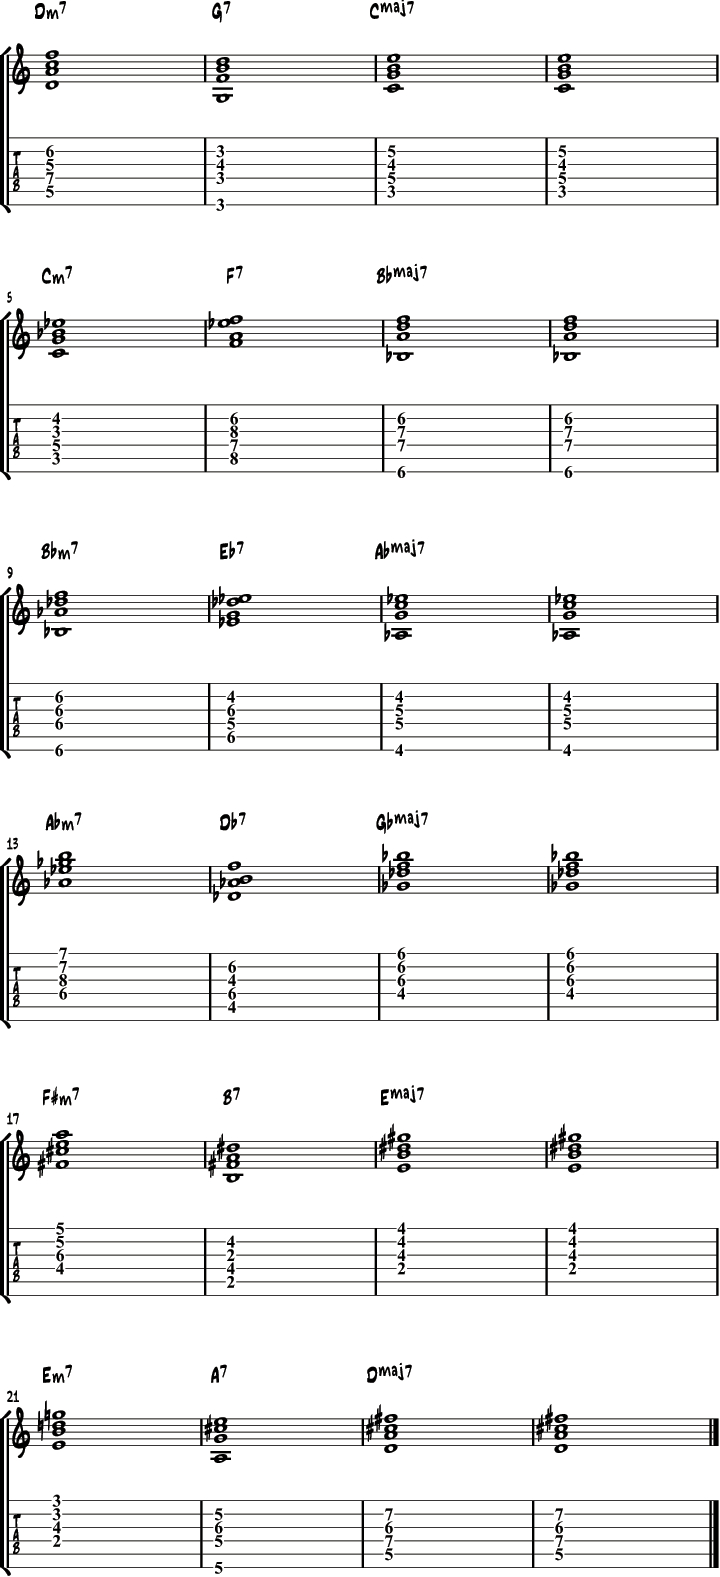 Guitar Chord Chart Top 17 Easy Jazz Guitar Chords For Beginners Chord Chart